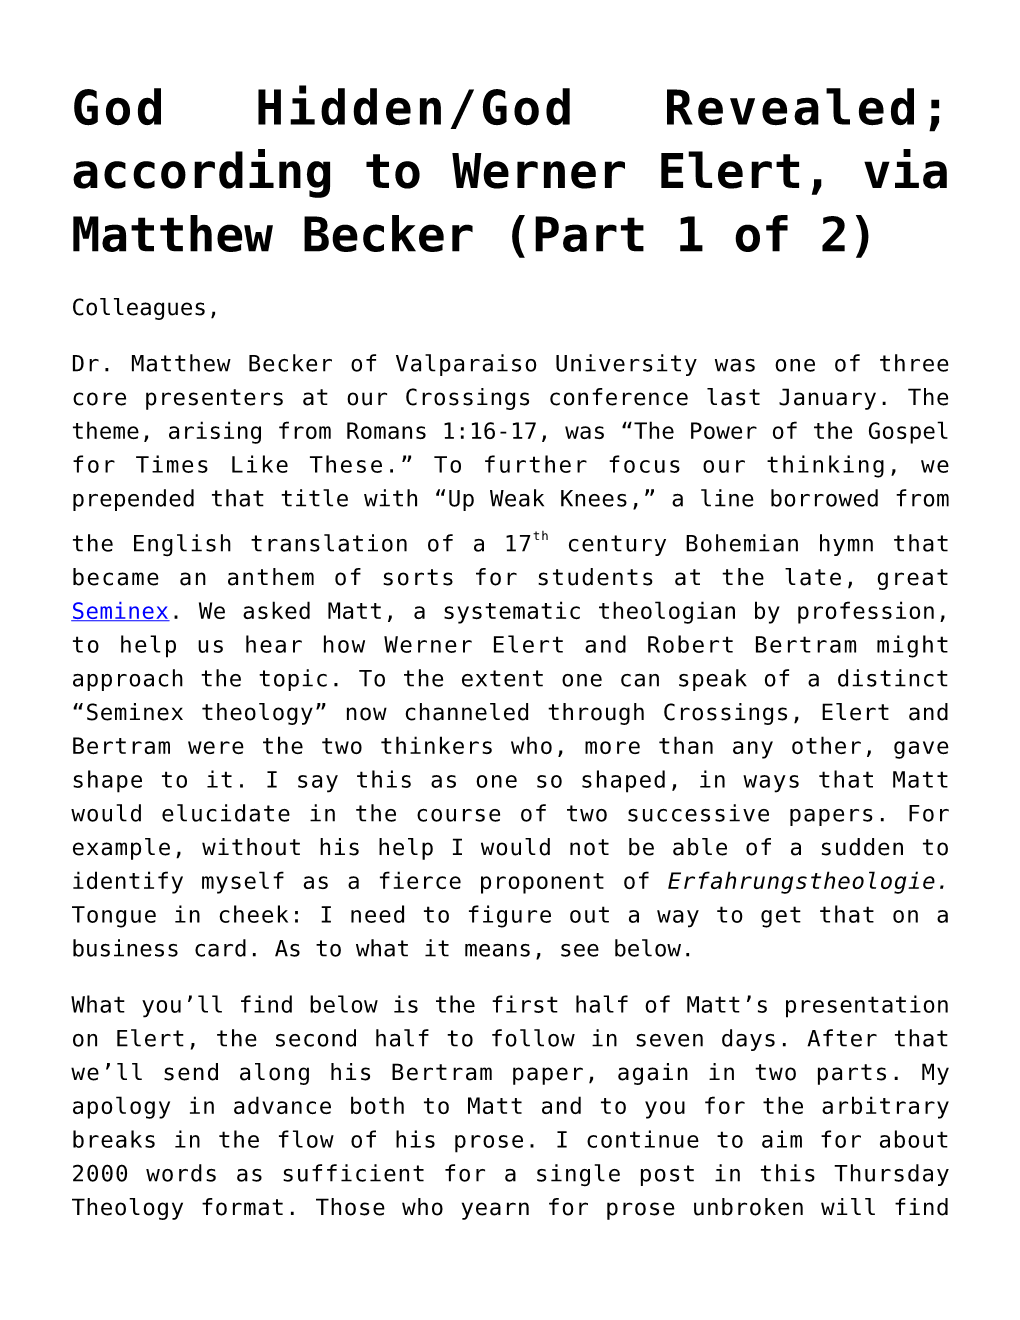 God Hidden/God Revealed; According to Werner Elert, Via Matthew Becker (Part 1 of 2)